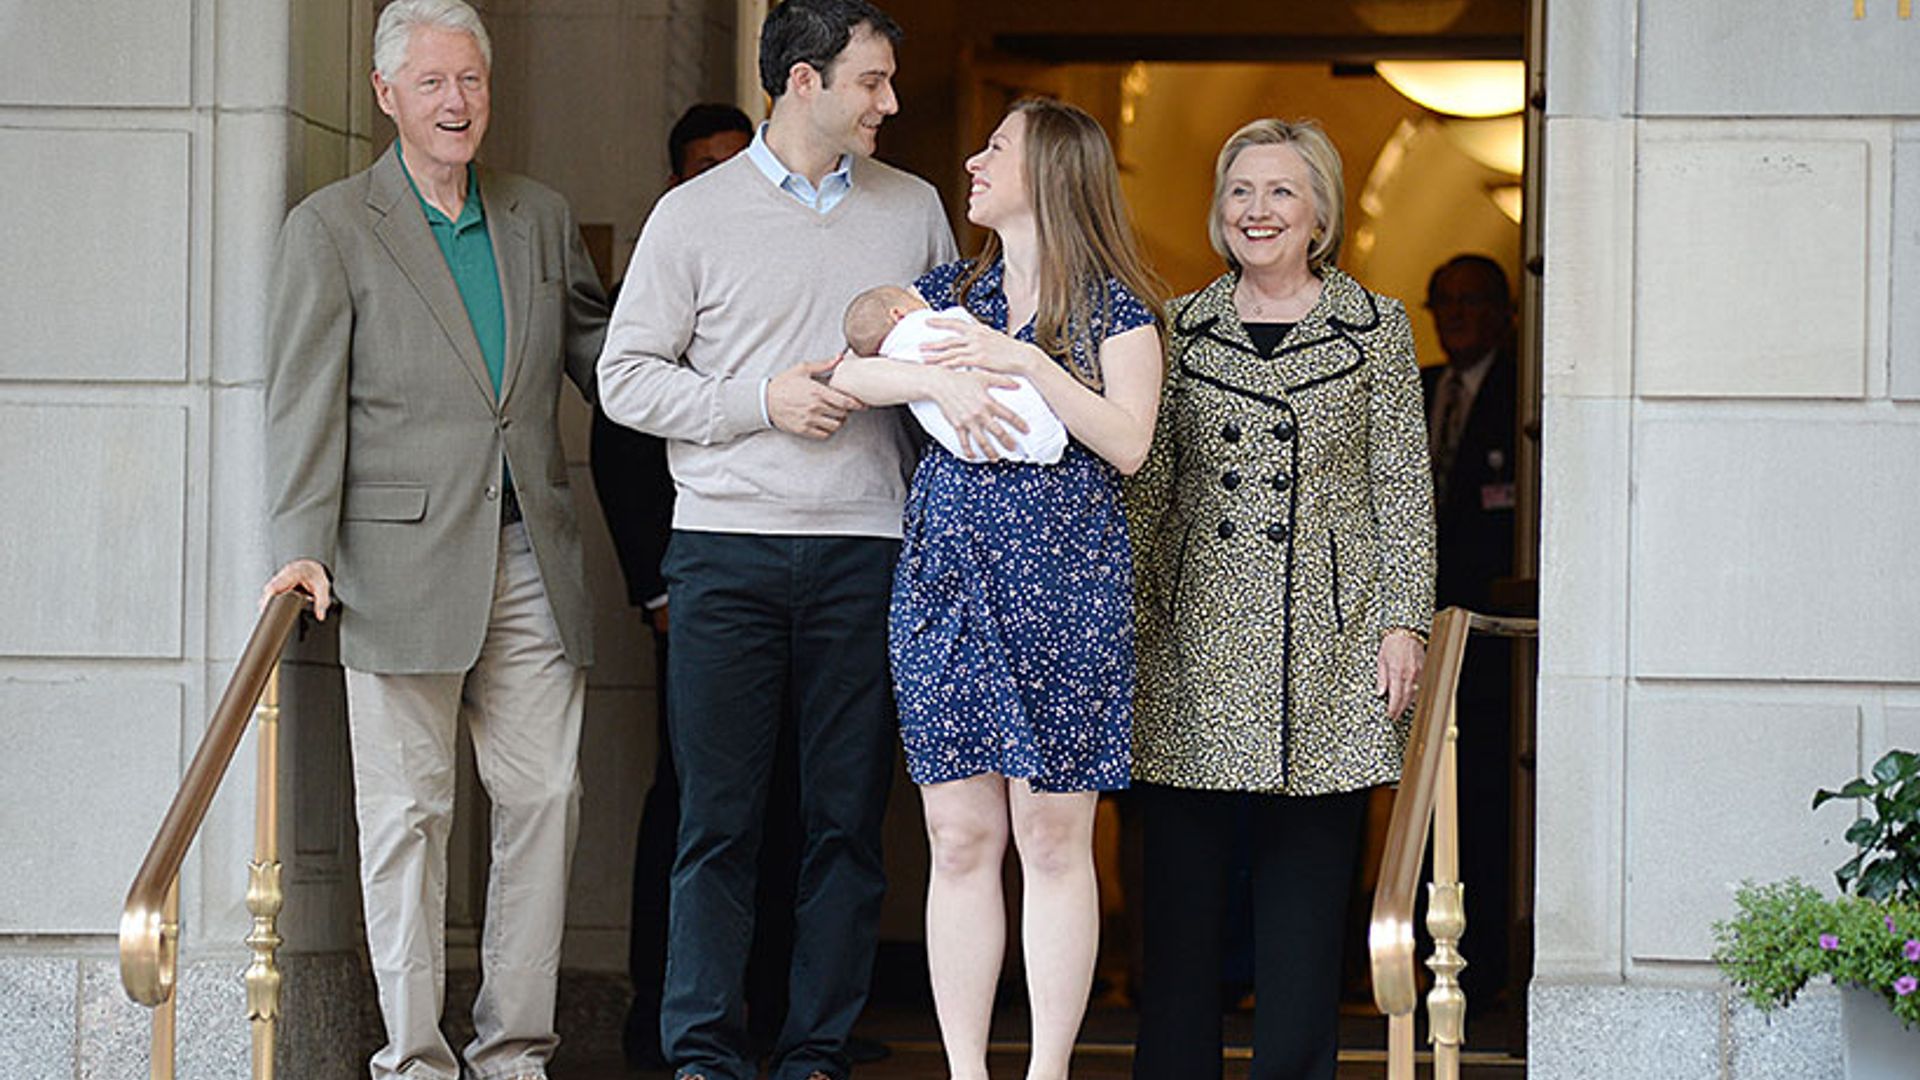 Chelsea Clinton leaves hospital with baby boy Aidan